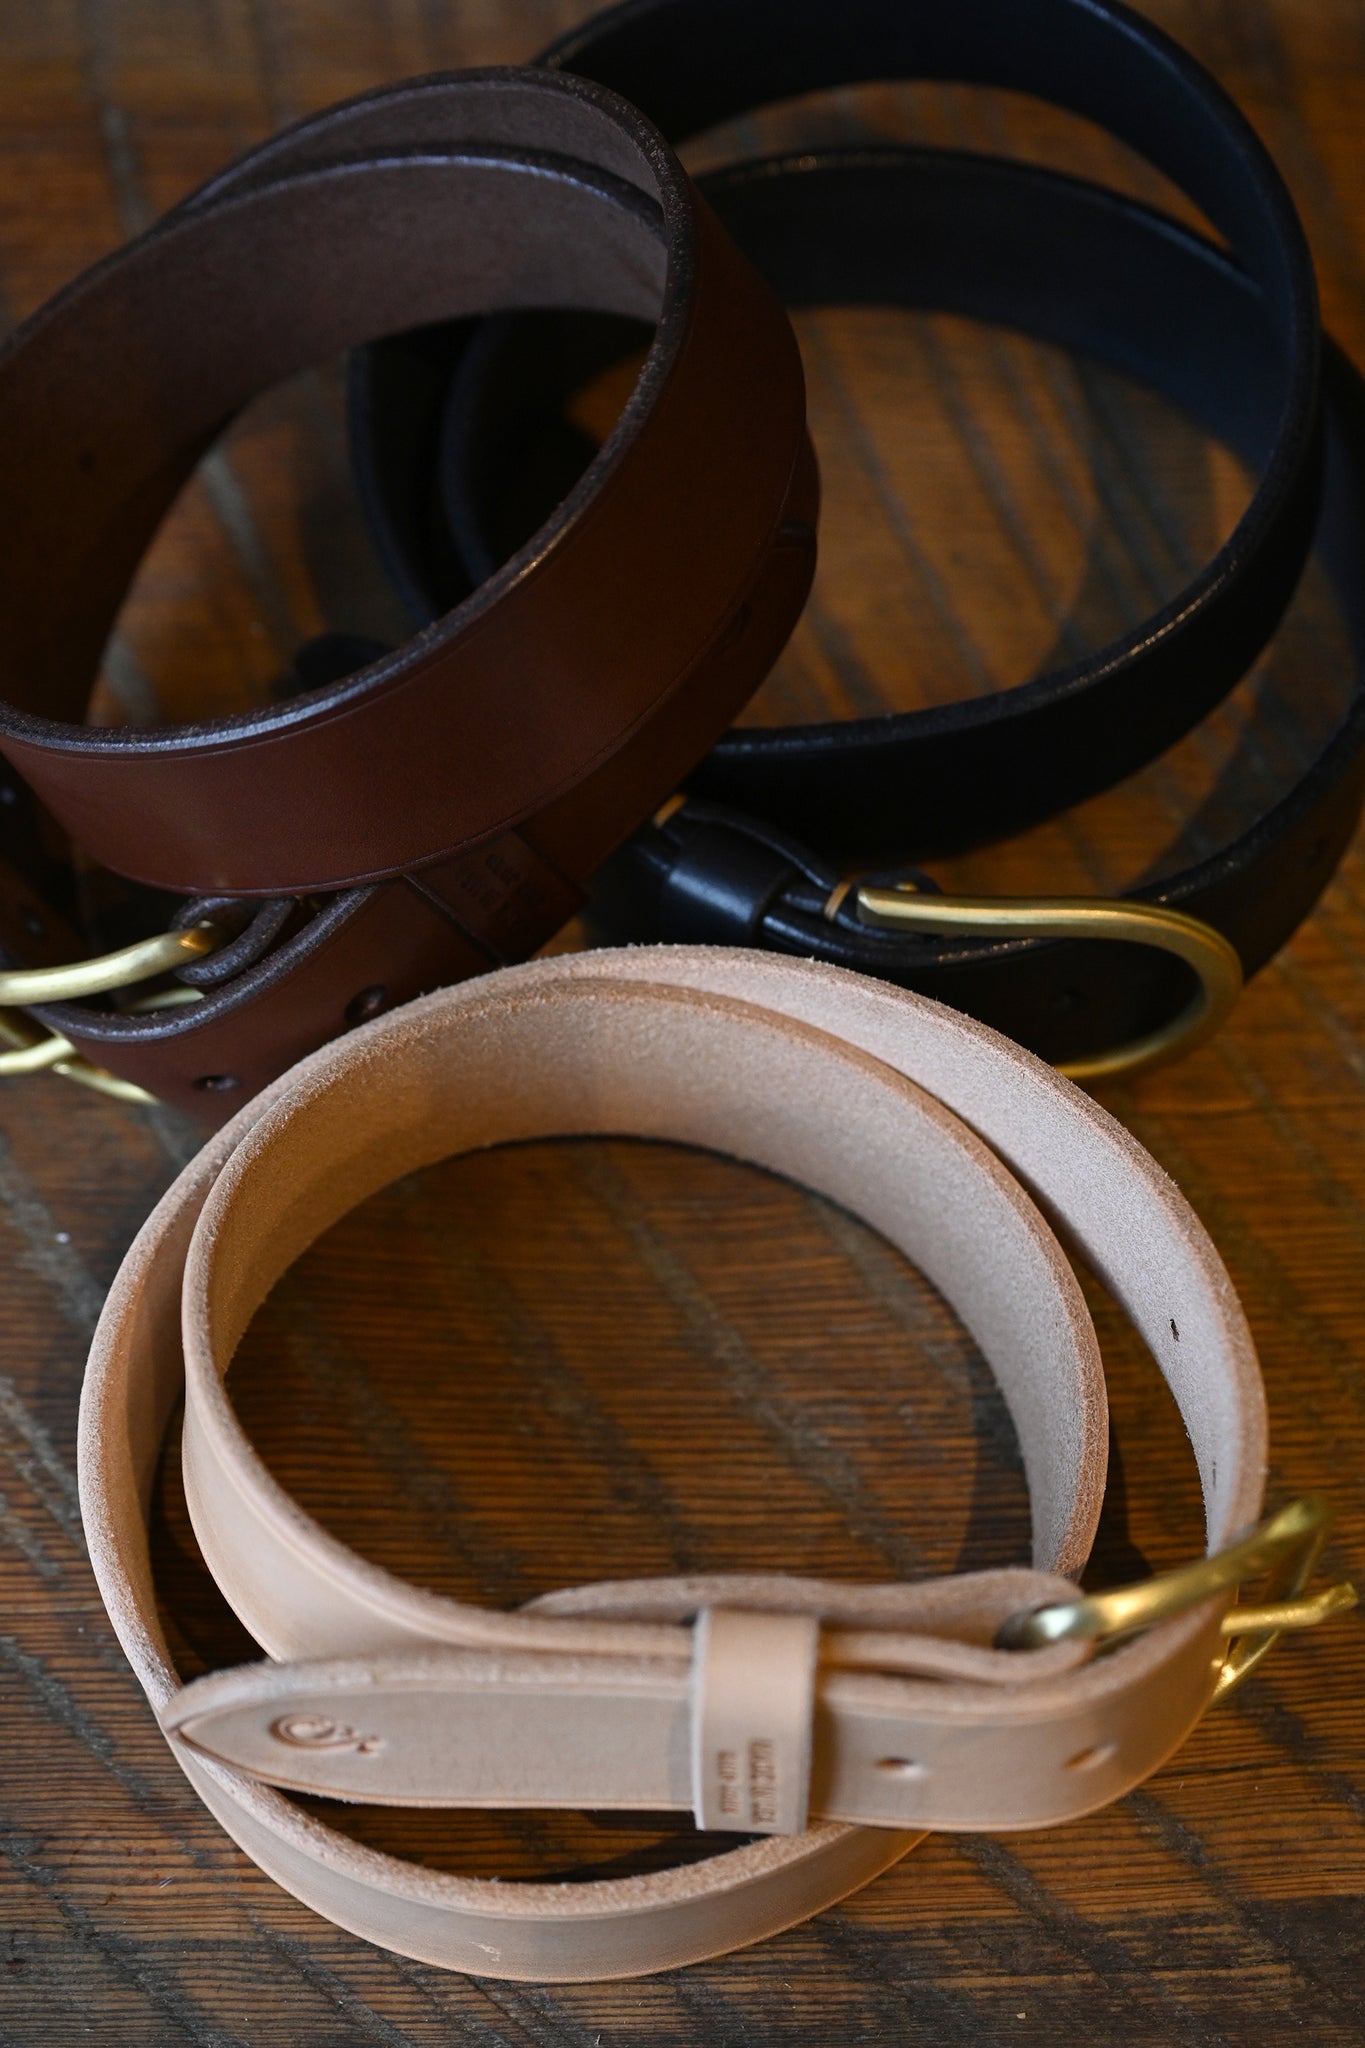 Leather Belt Blank - Horween CXL - Made for Buckles - Chicago Screws -  Leather Belt Keeper - www.thecopperbuckle.com